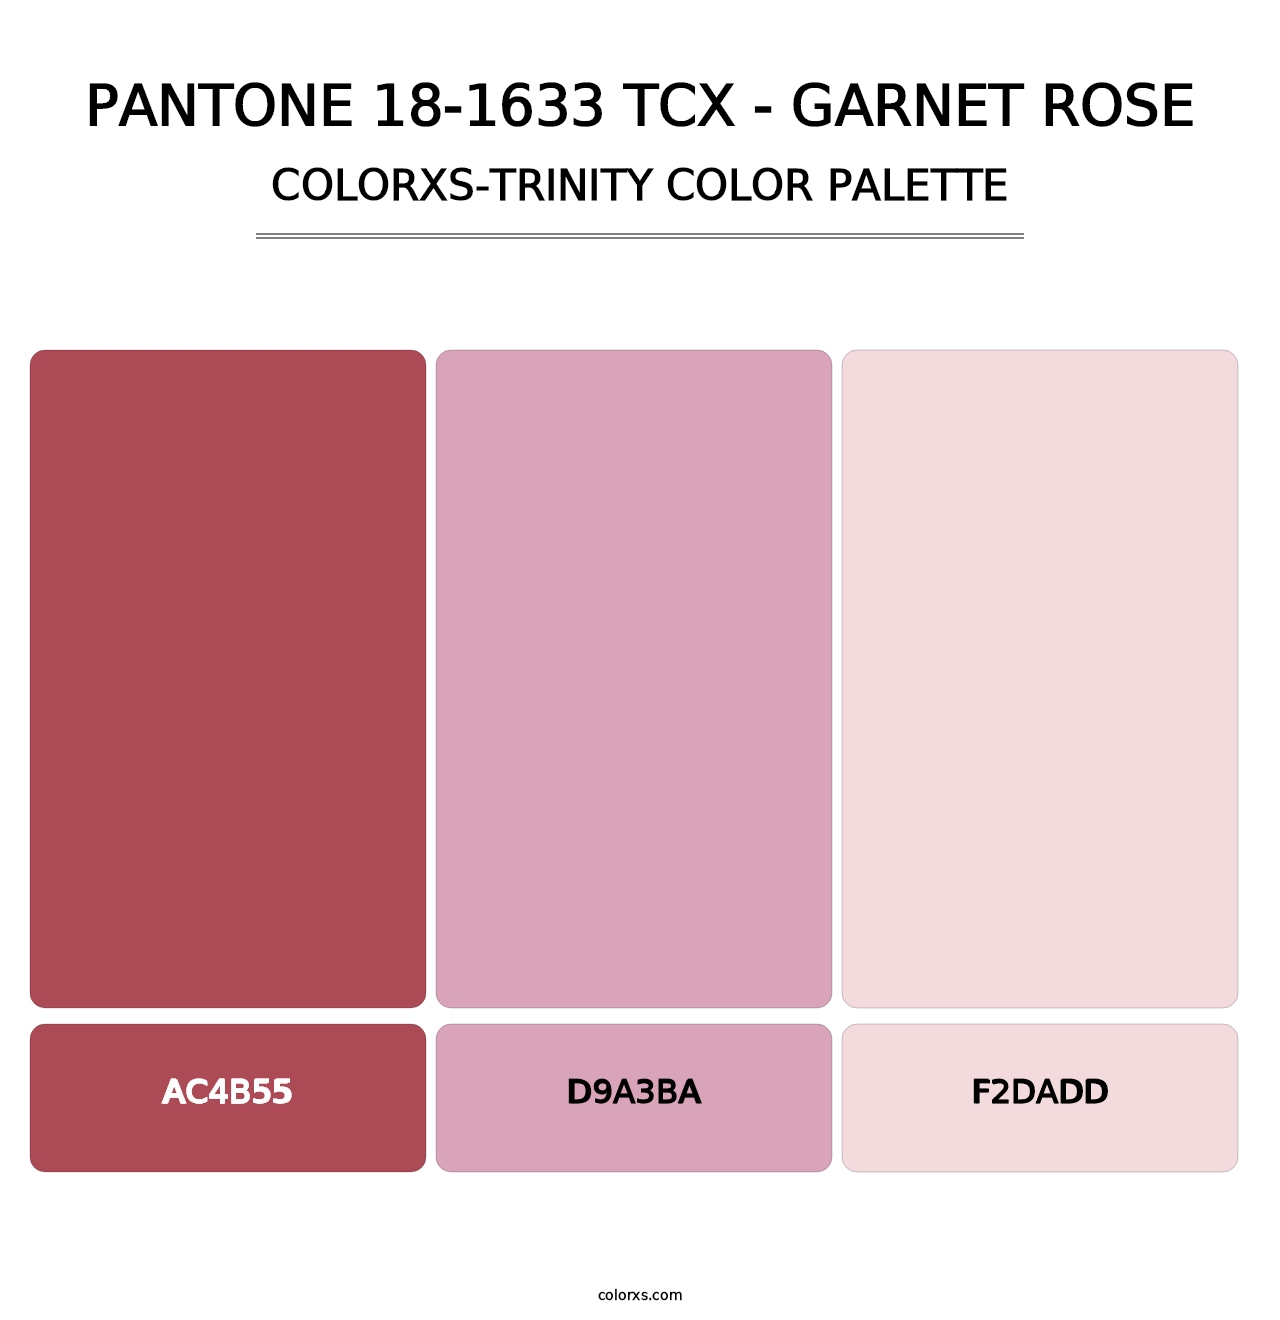 PANTONE 18-1633 TCX - Garnet Rose - Colorxs Trinity Palette